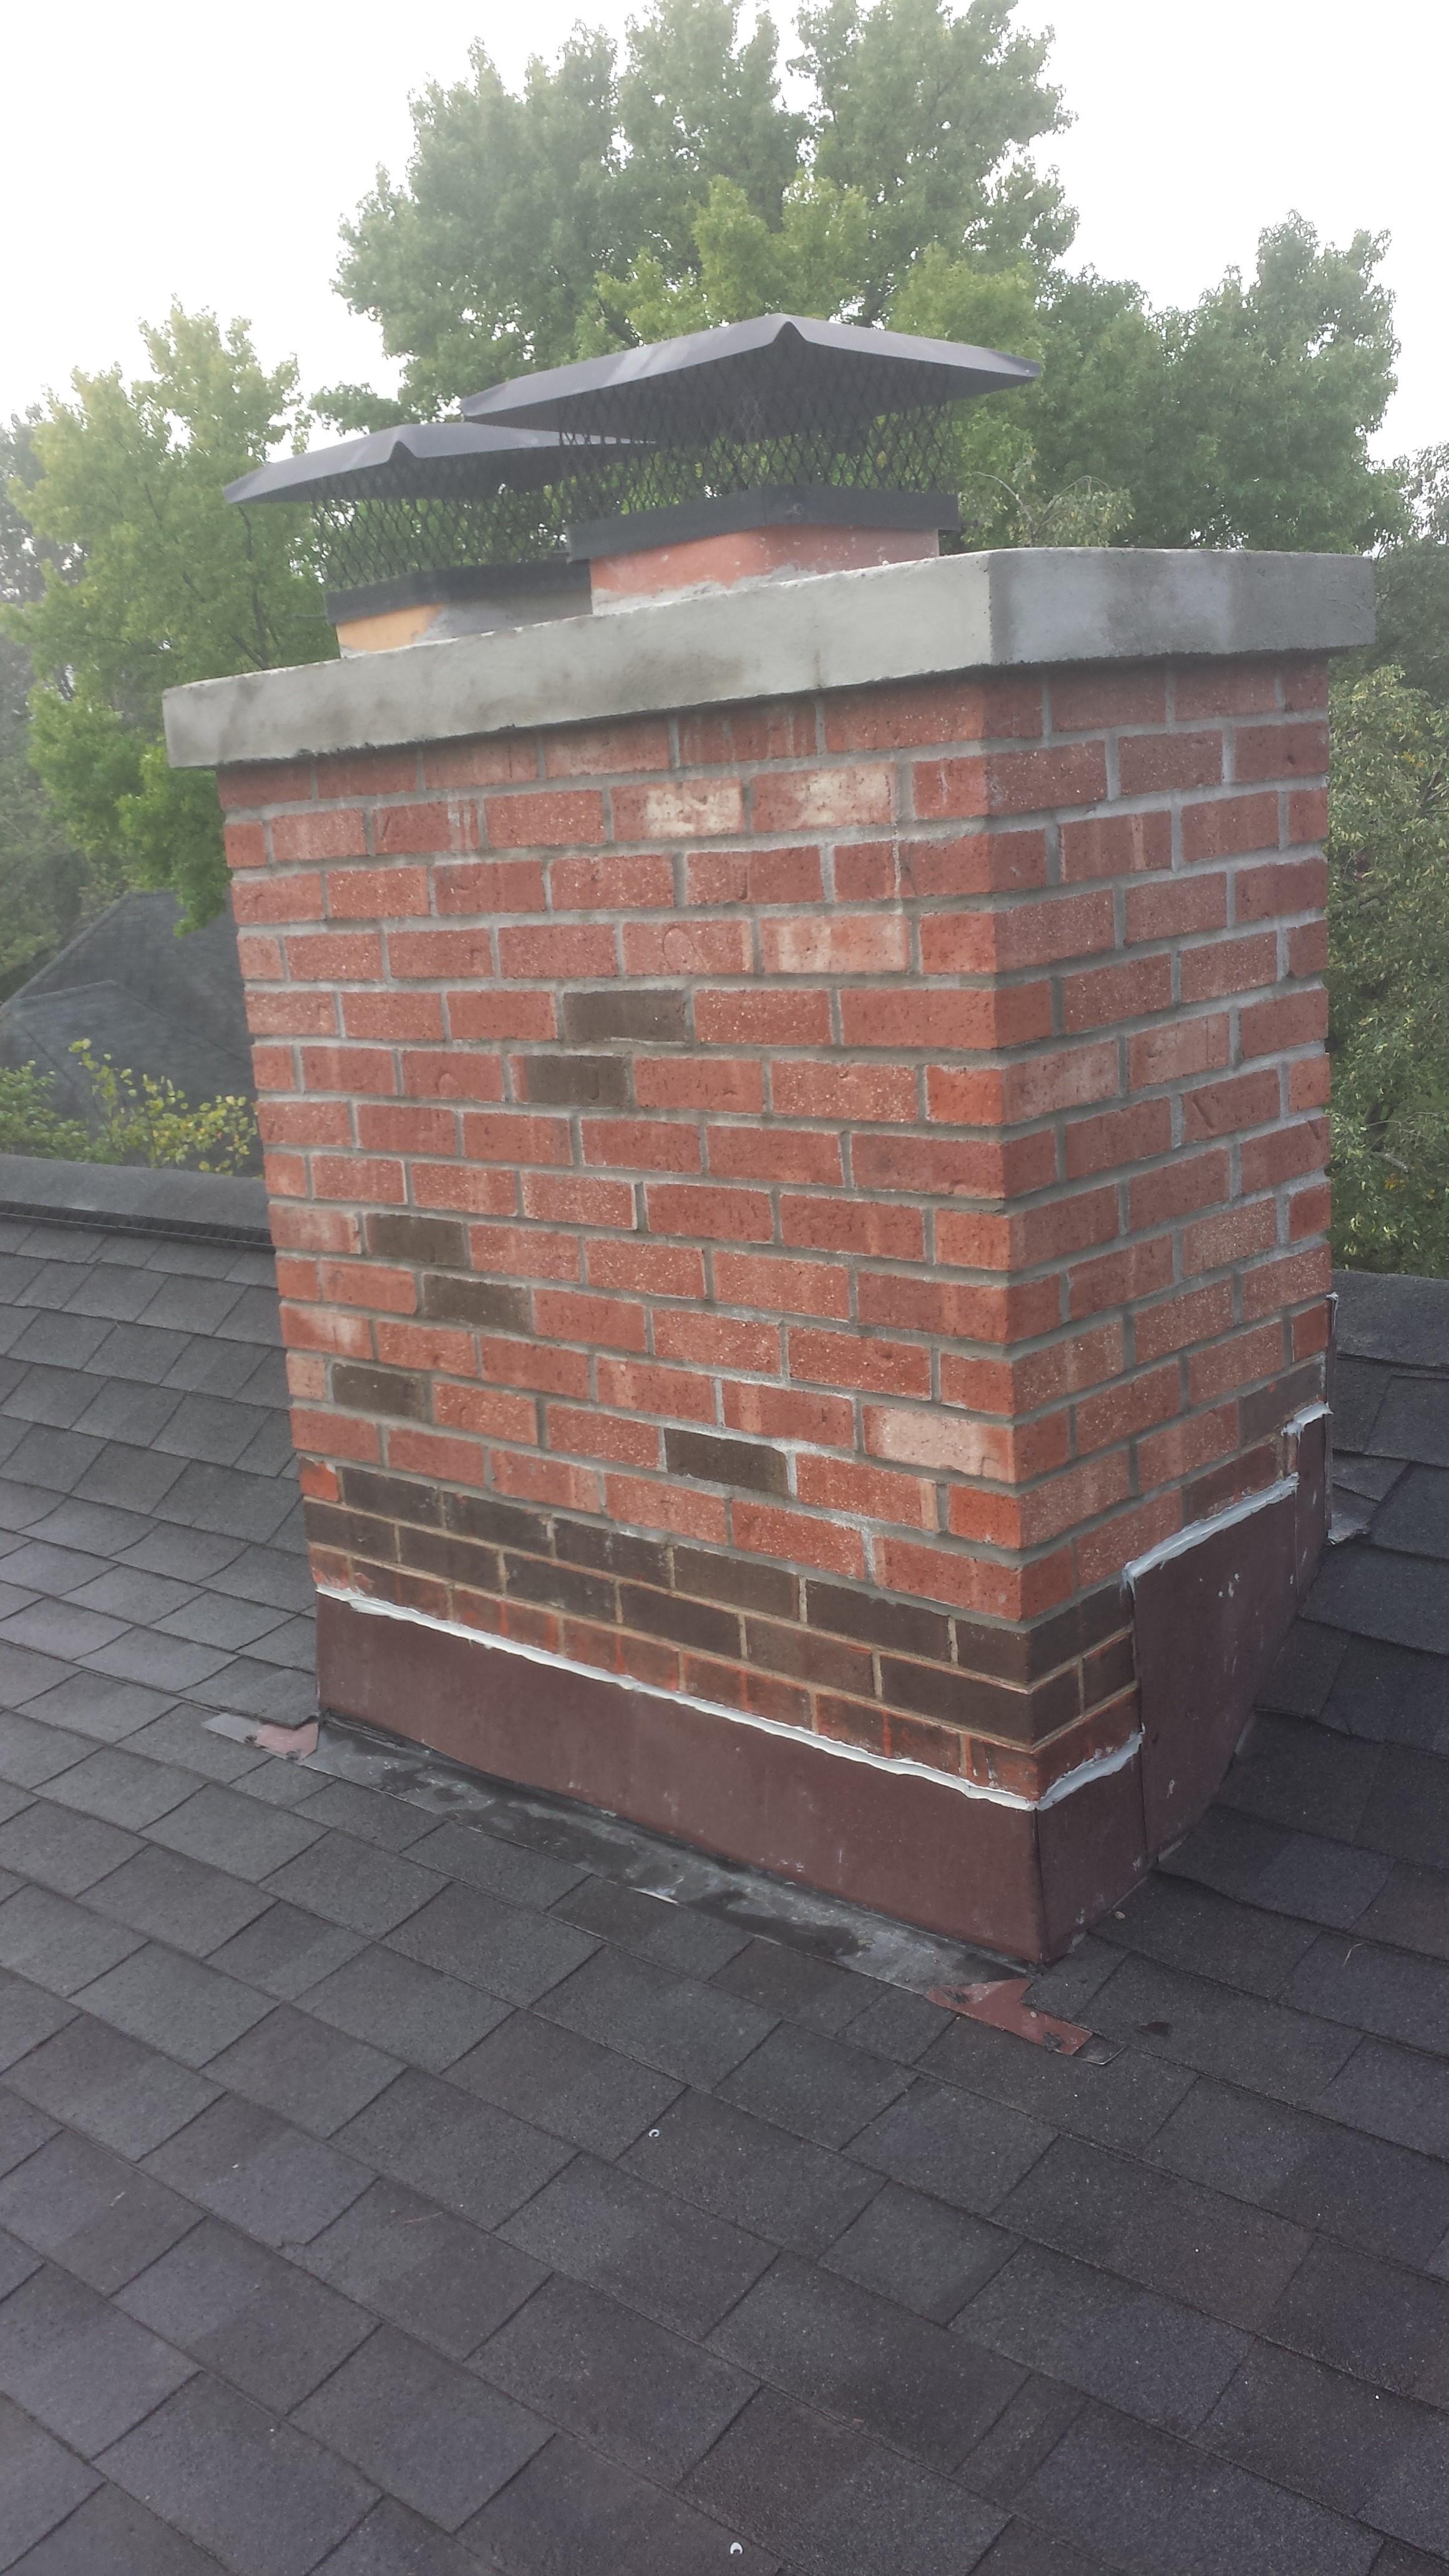 Proper chimney installation